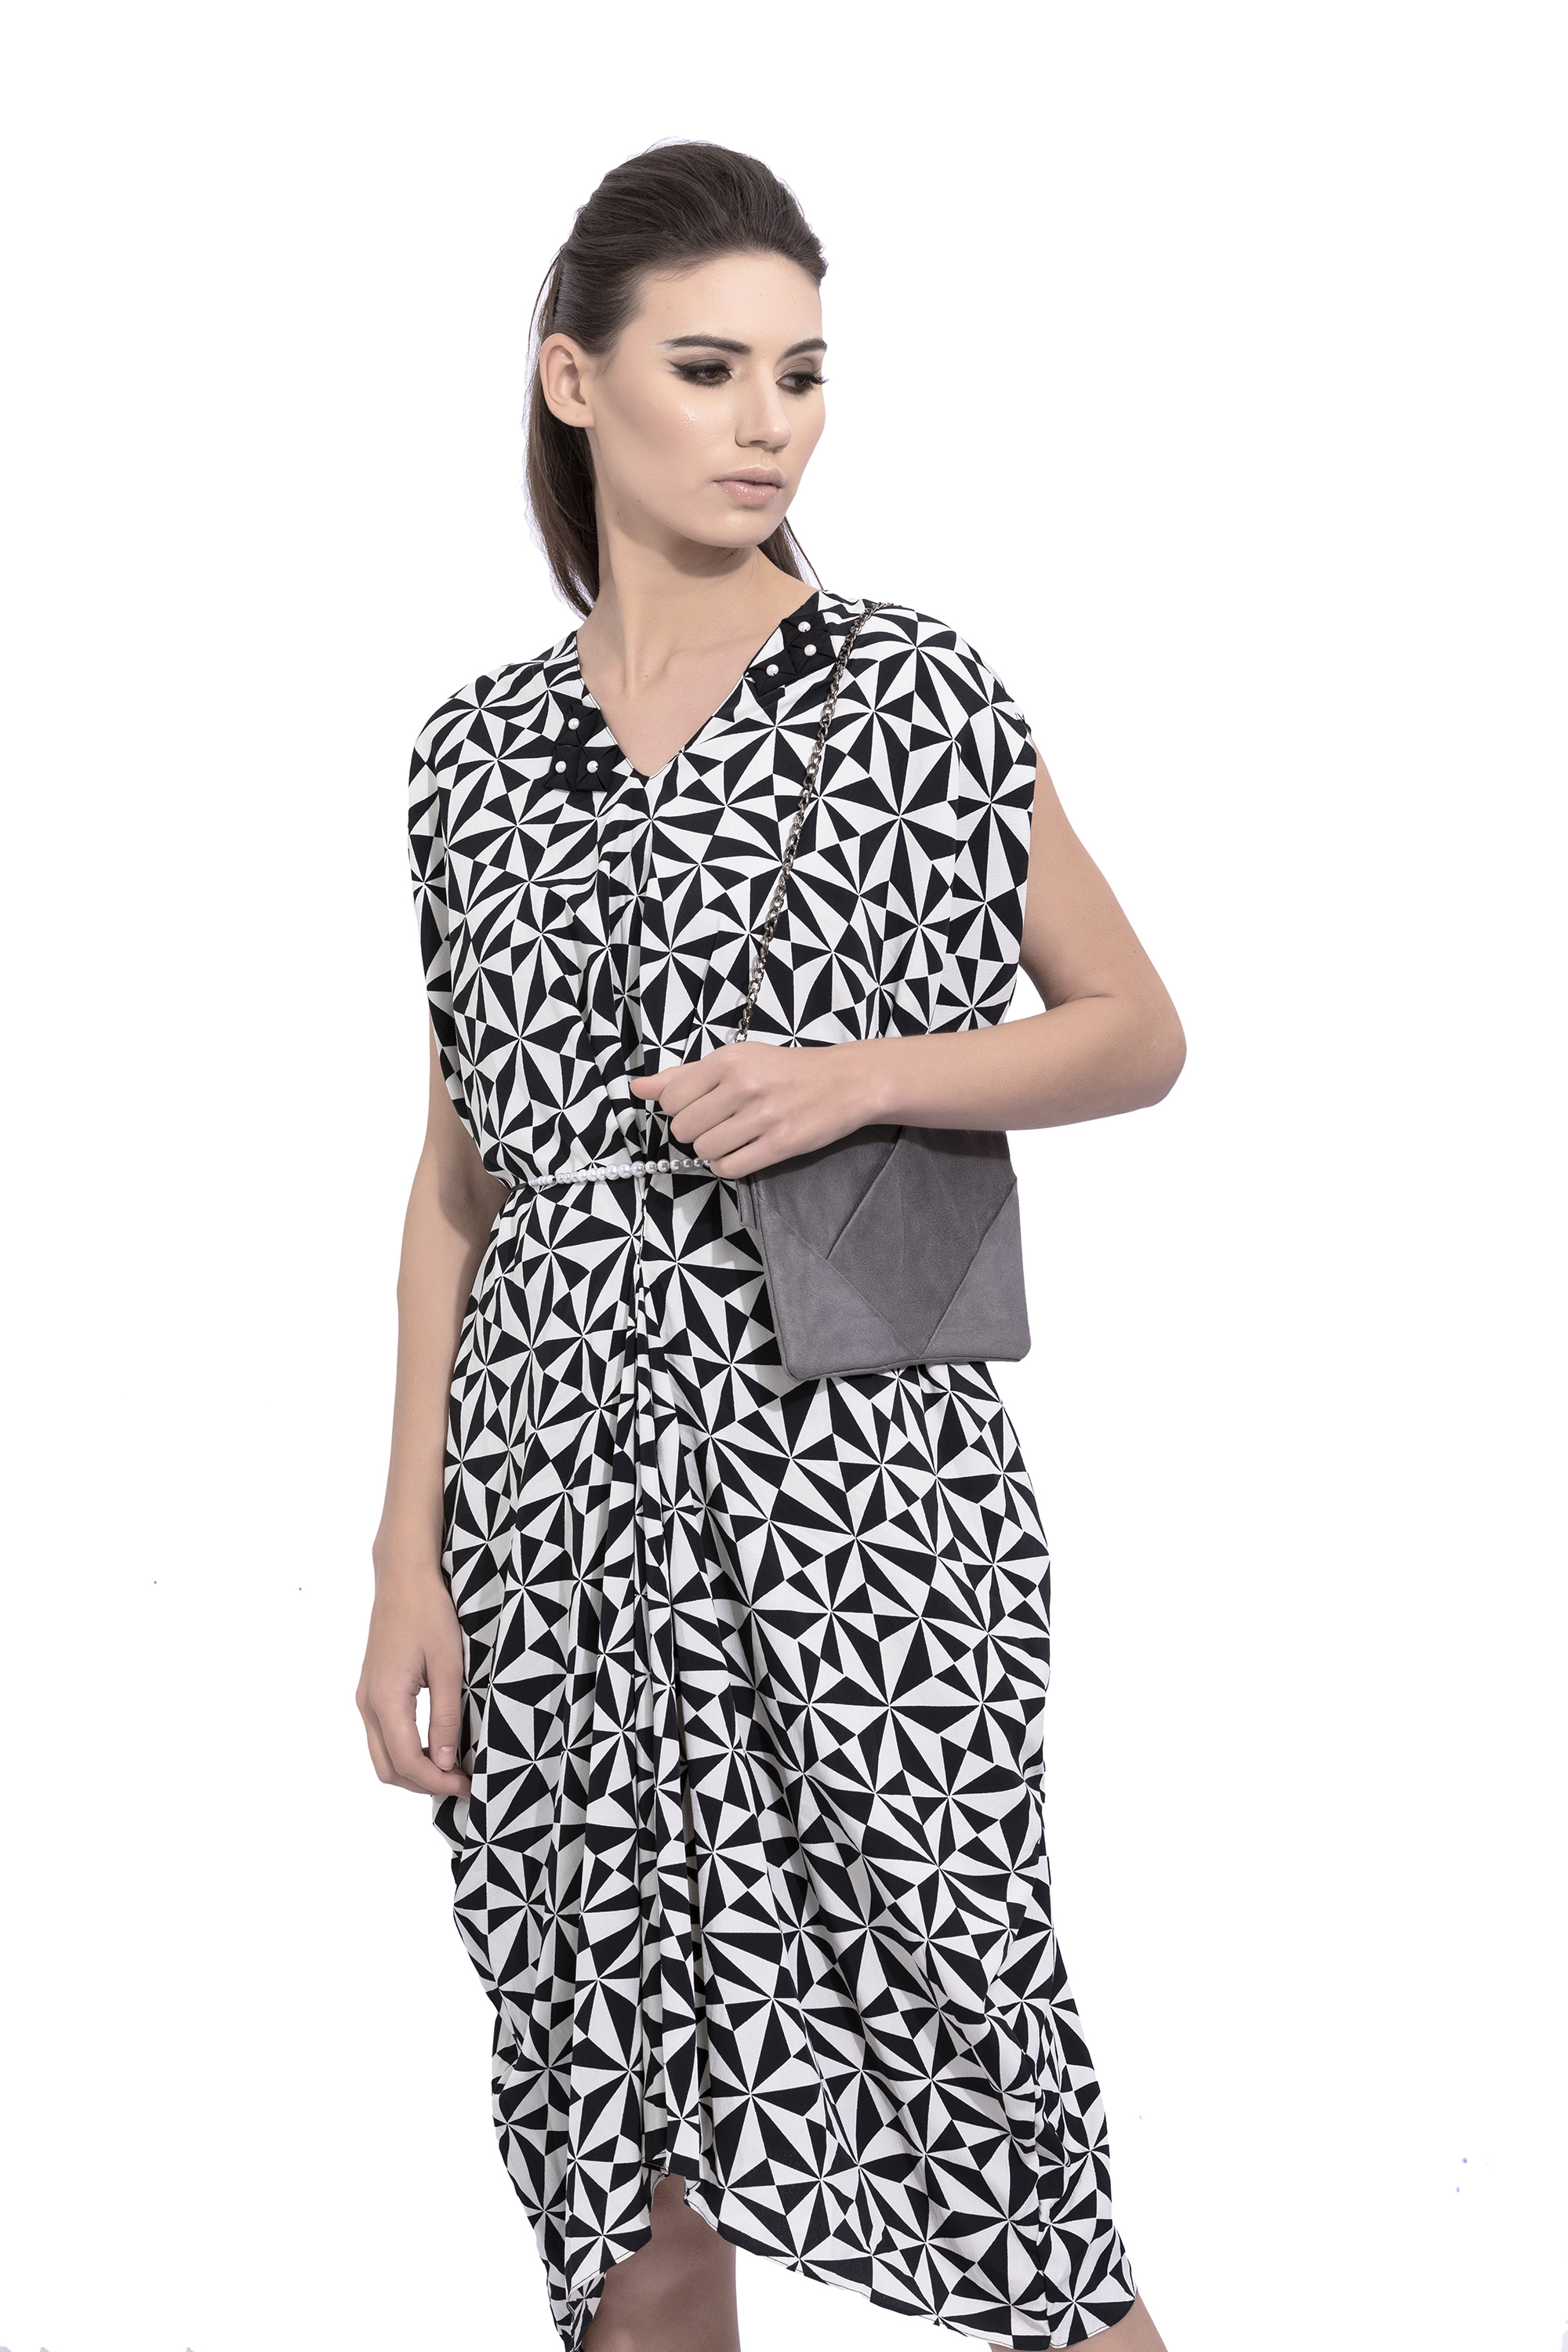 Black & White Geometric Print Dress